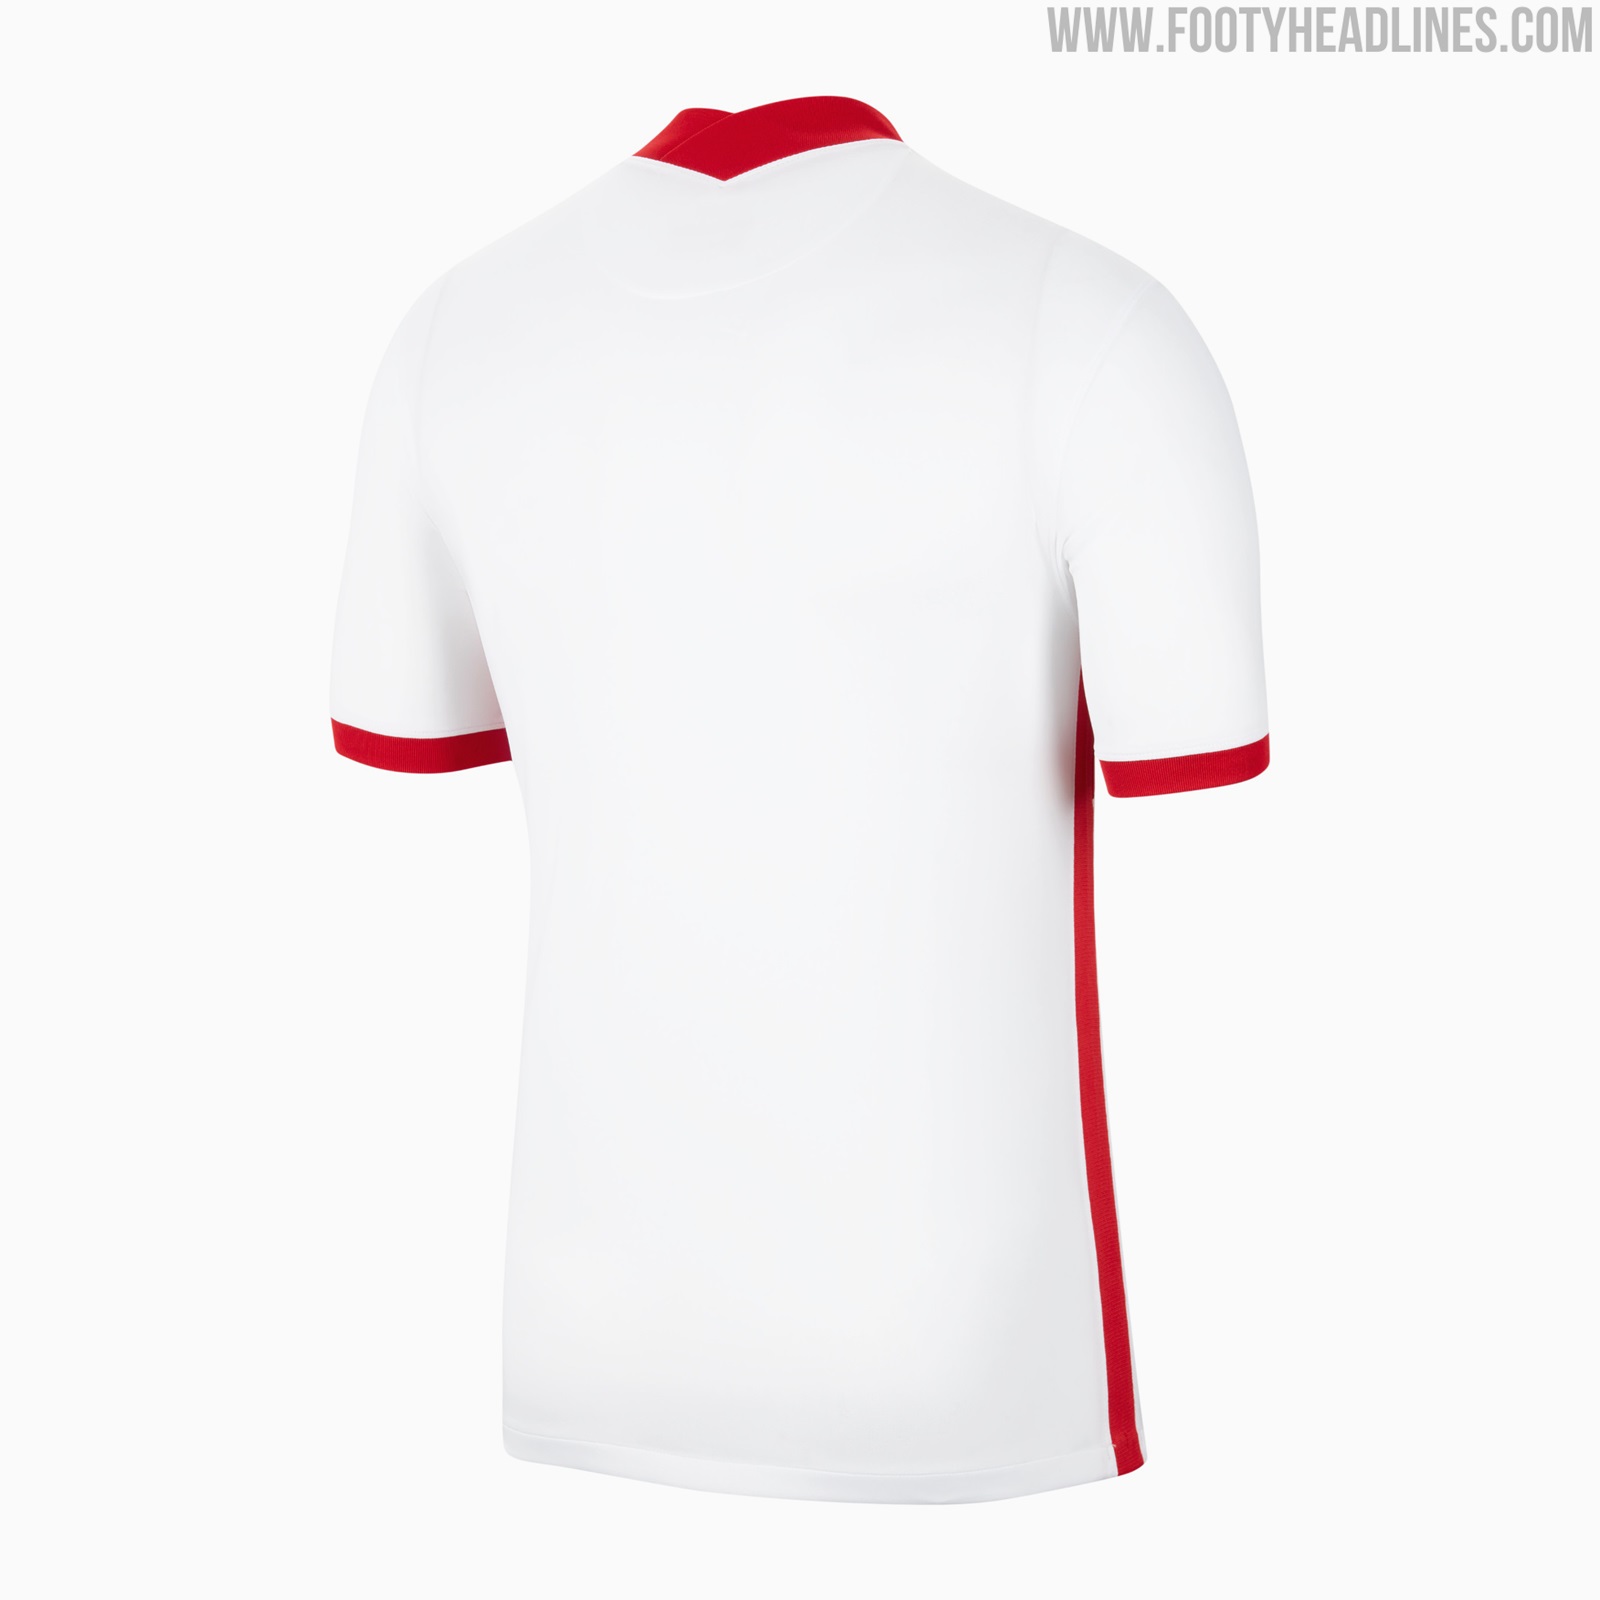 Nike - SPARTAK MOSCOW 2021/22 Season Jersey Away Game Equipment